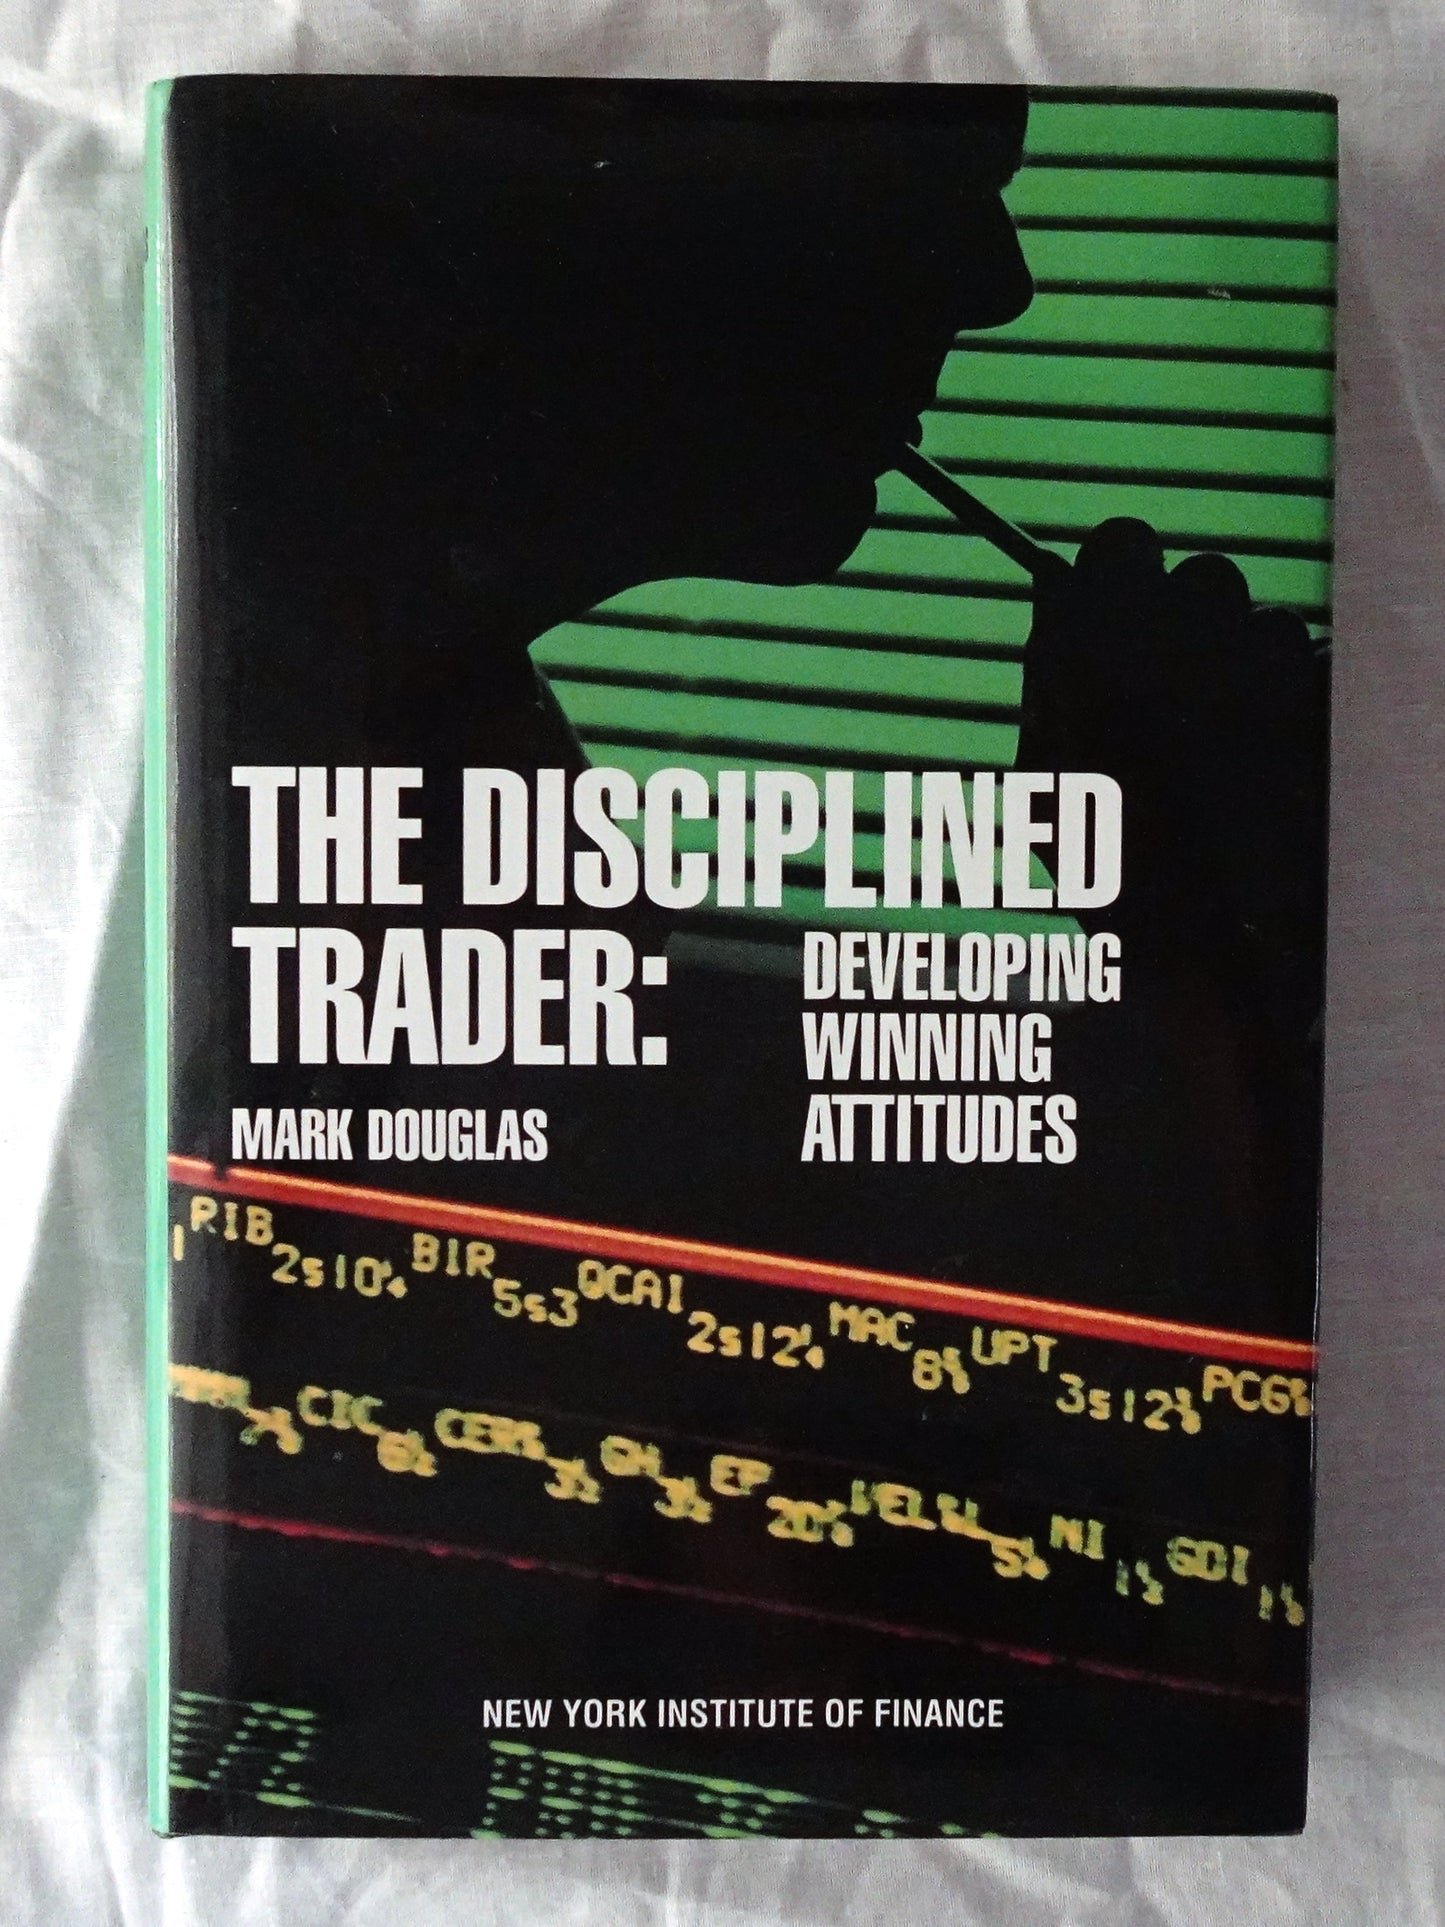 The Disciplined Trader  Developing Winning Attitudes  by Mark Douglas